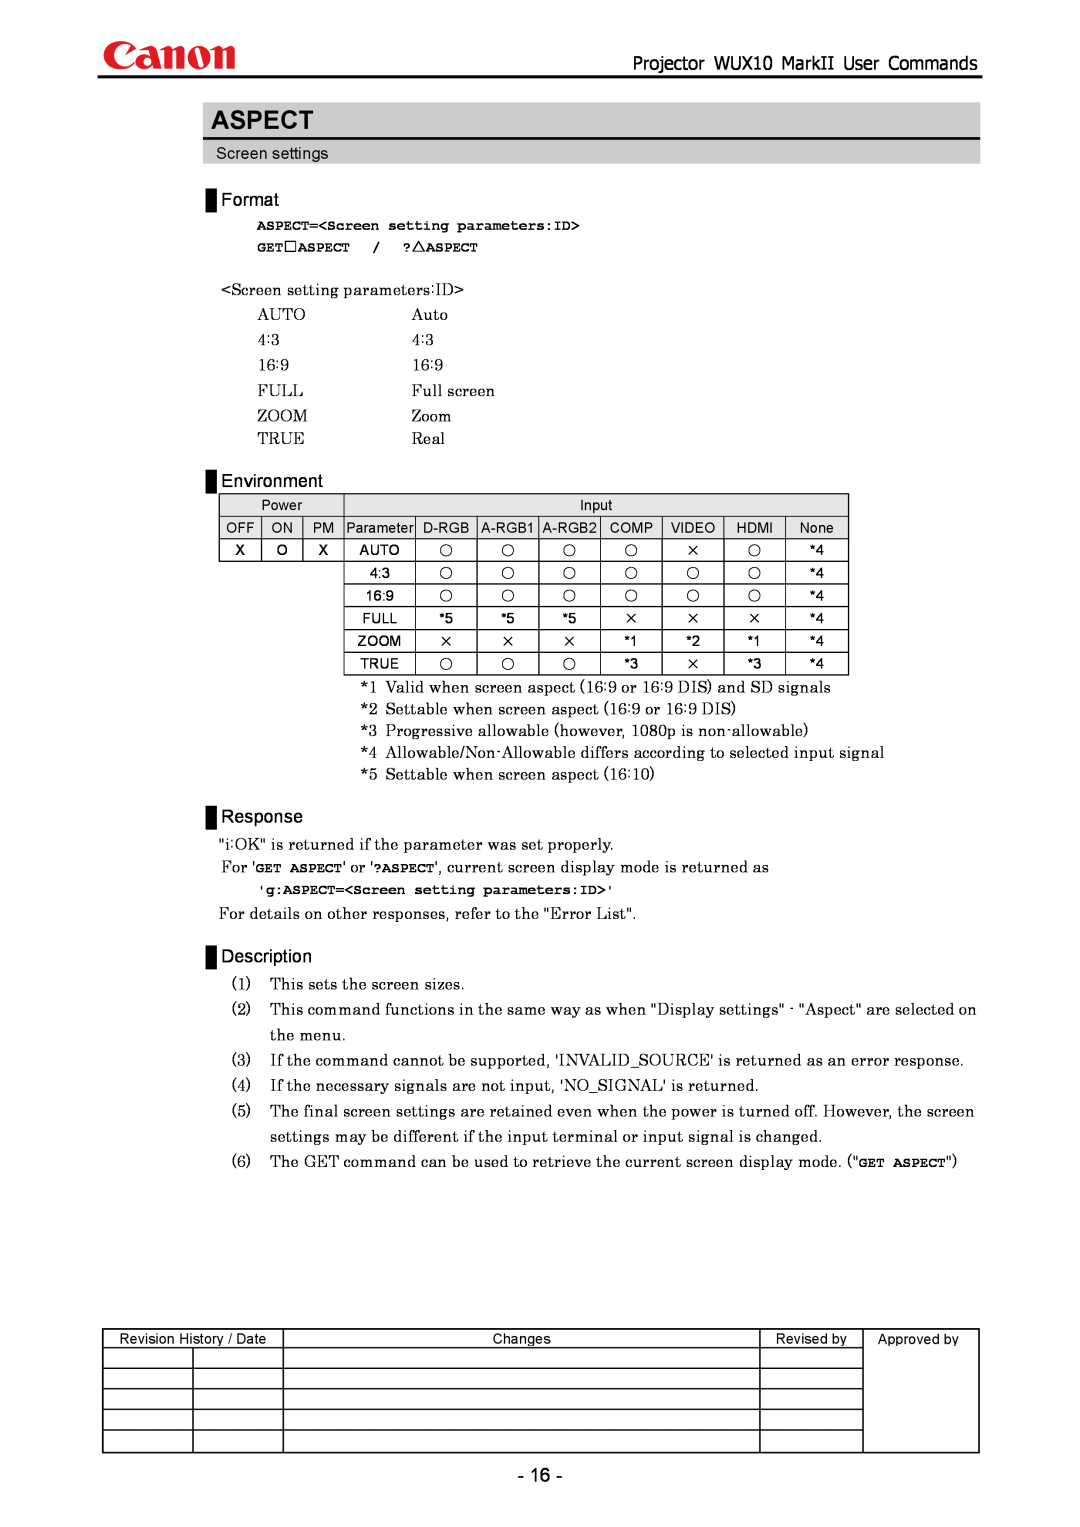 Canon manual Aspect, Projector WUX10 MarkII User Commands, Format, Environment, Response, Description 